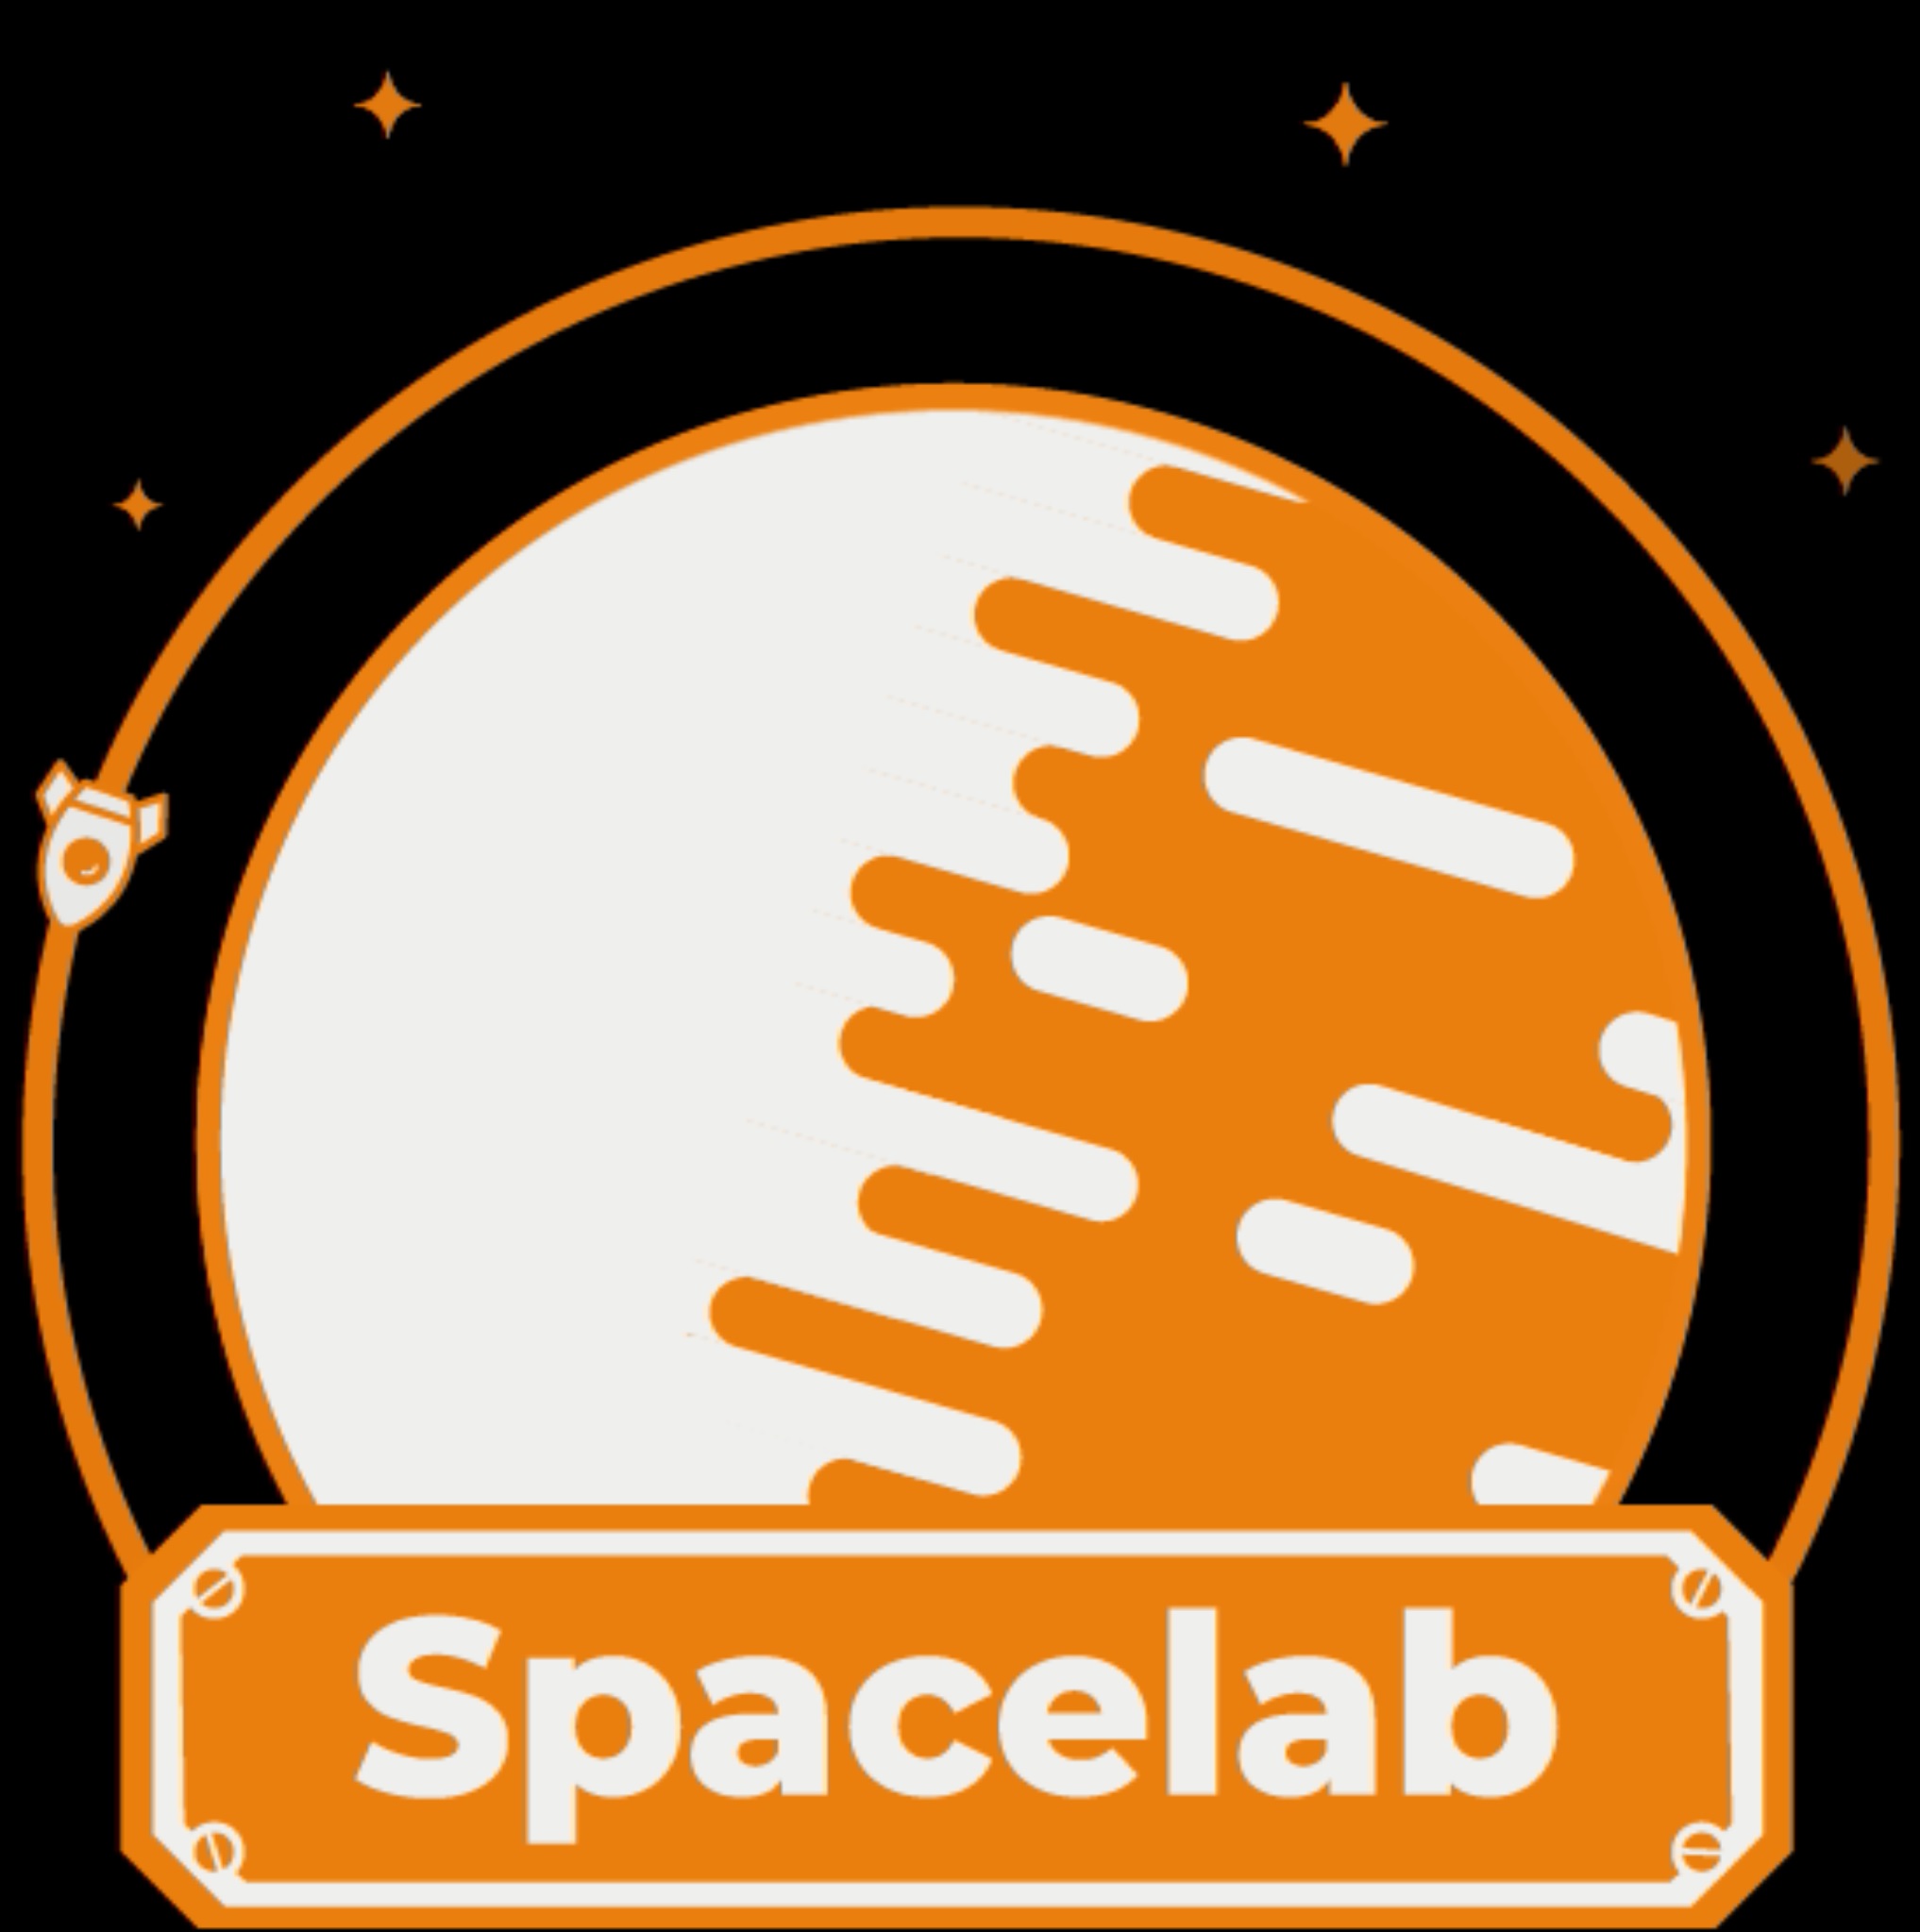 the Spacelab logo